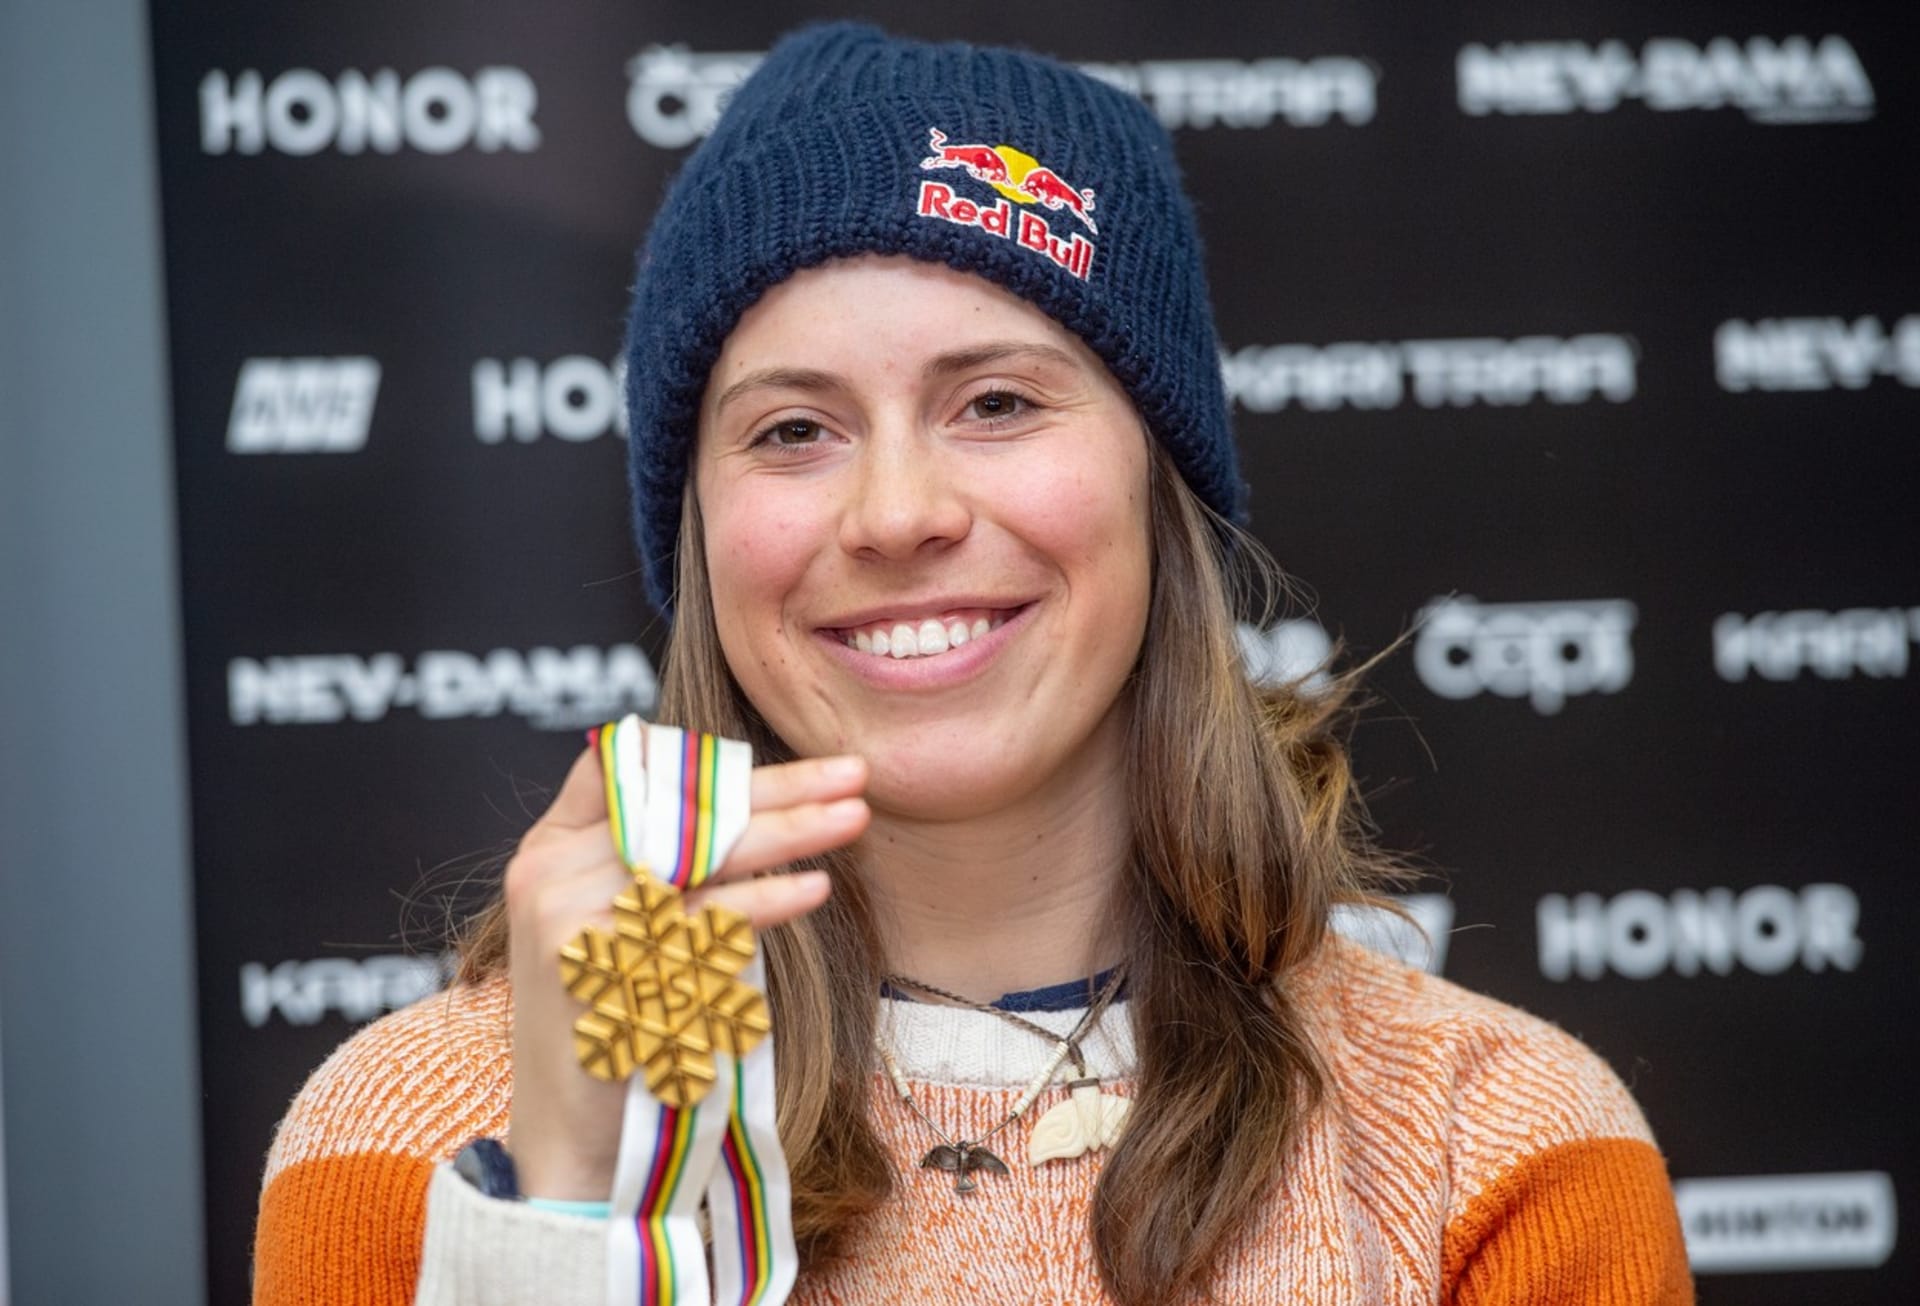 Snowboardistka Eva Samková na mistrovství světa vybojovala zlatou medaili (rok 2019).